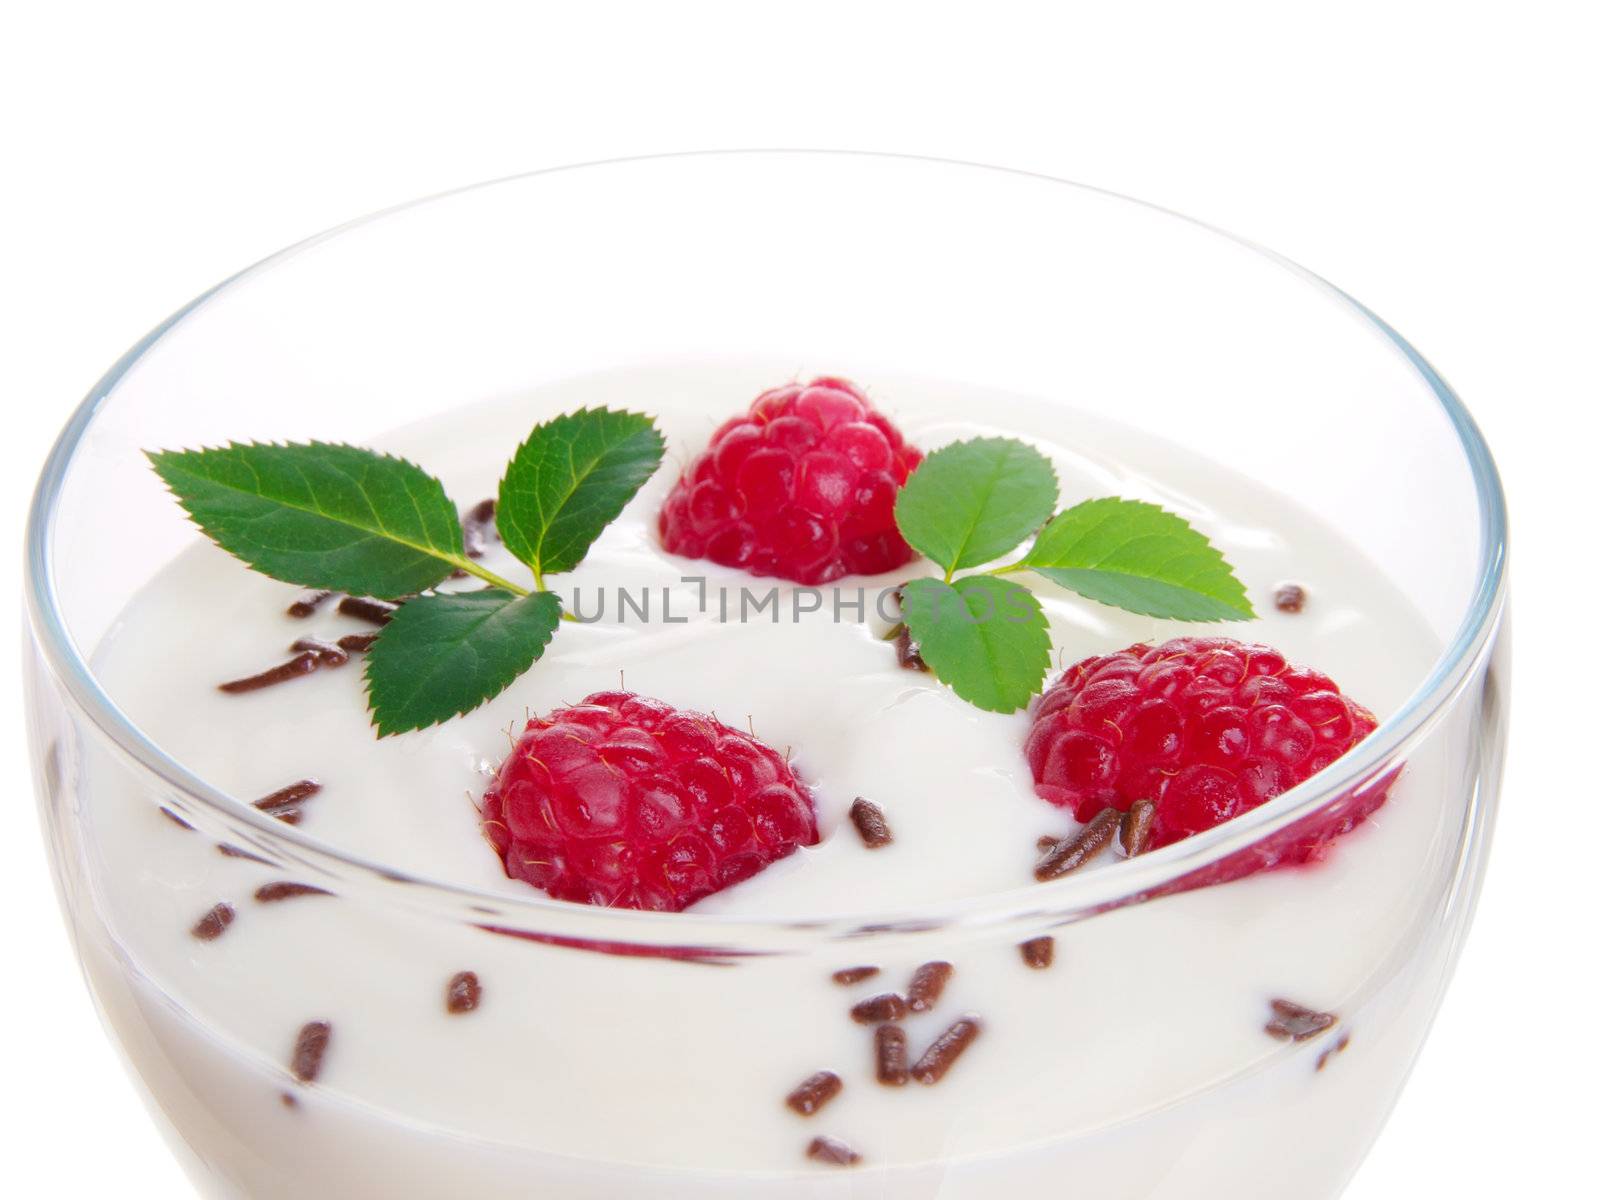 raspberries with yogurt.